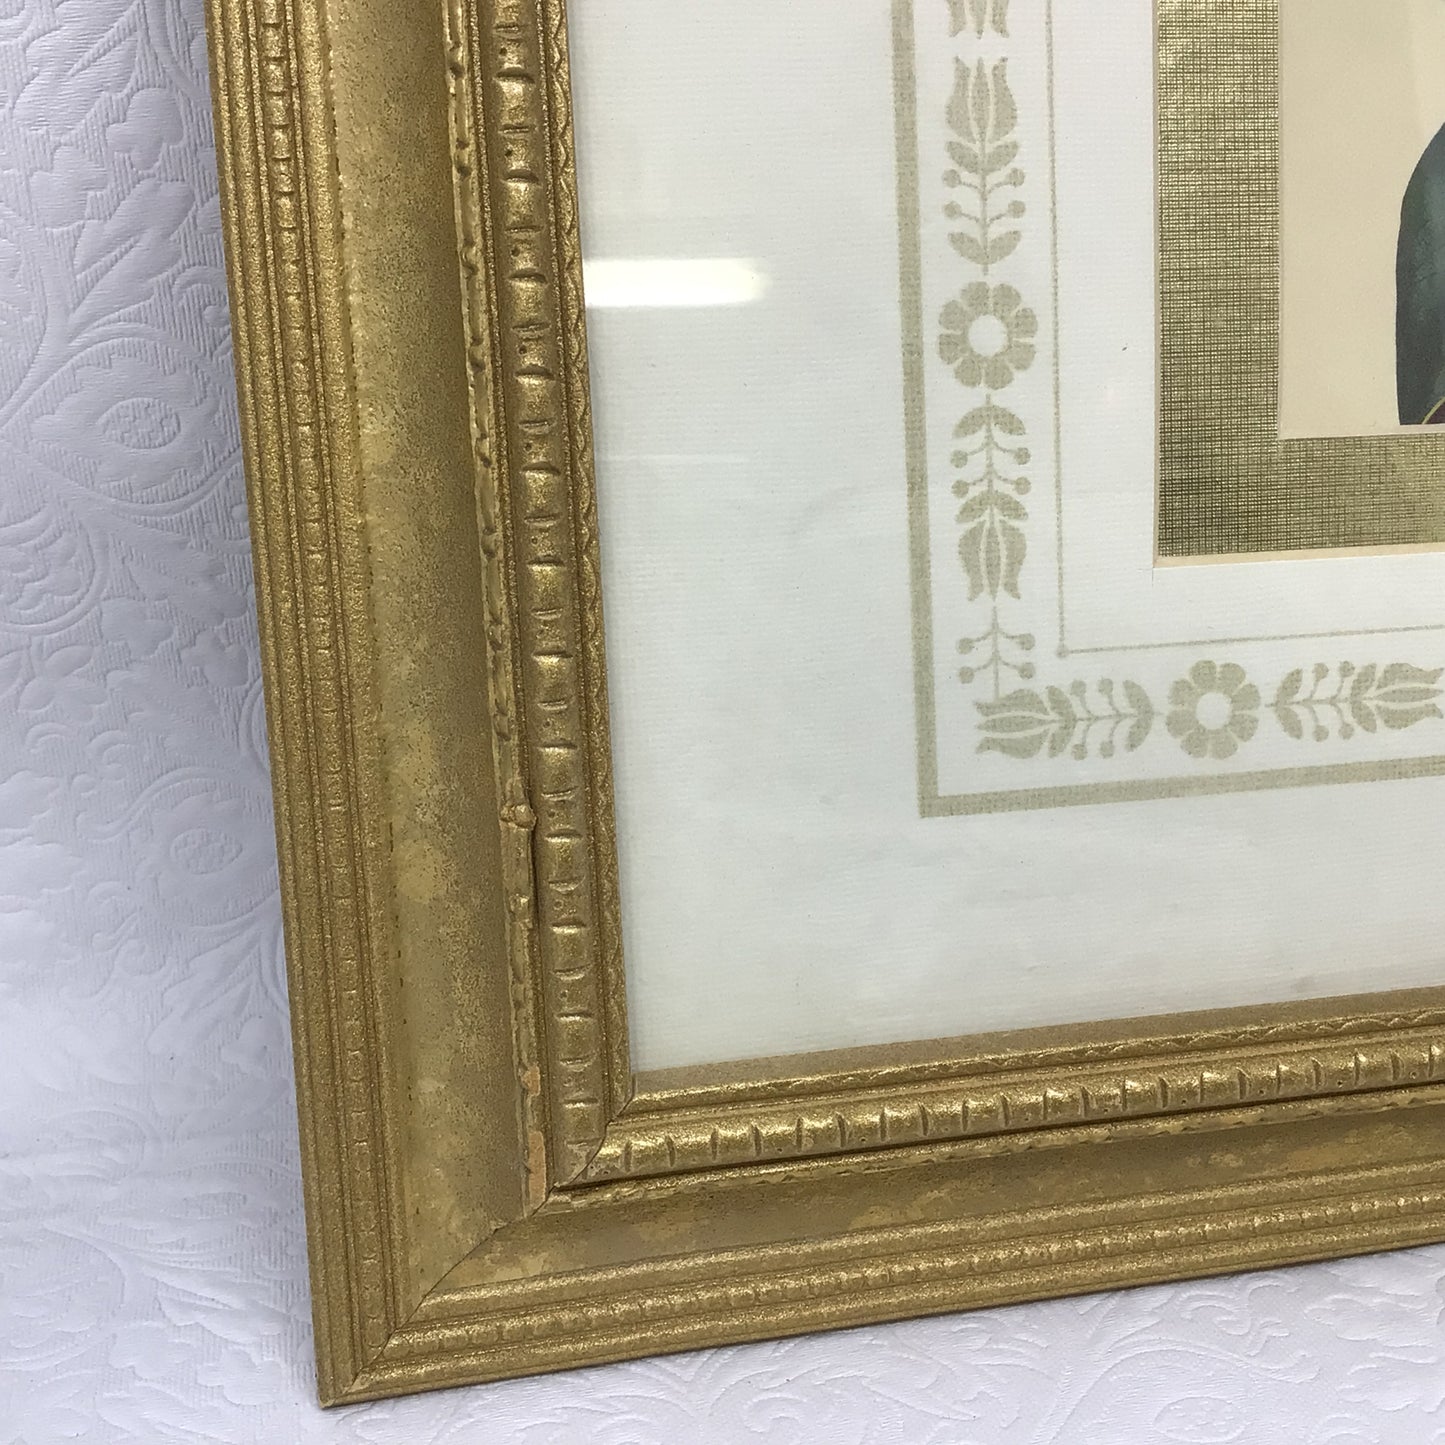 “Flowers” Print in Ornate Gold Frame